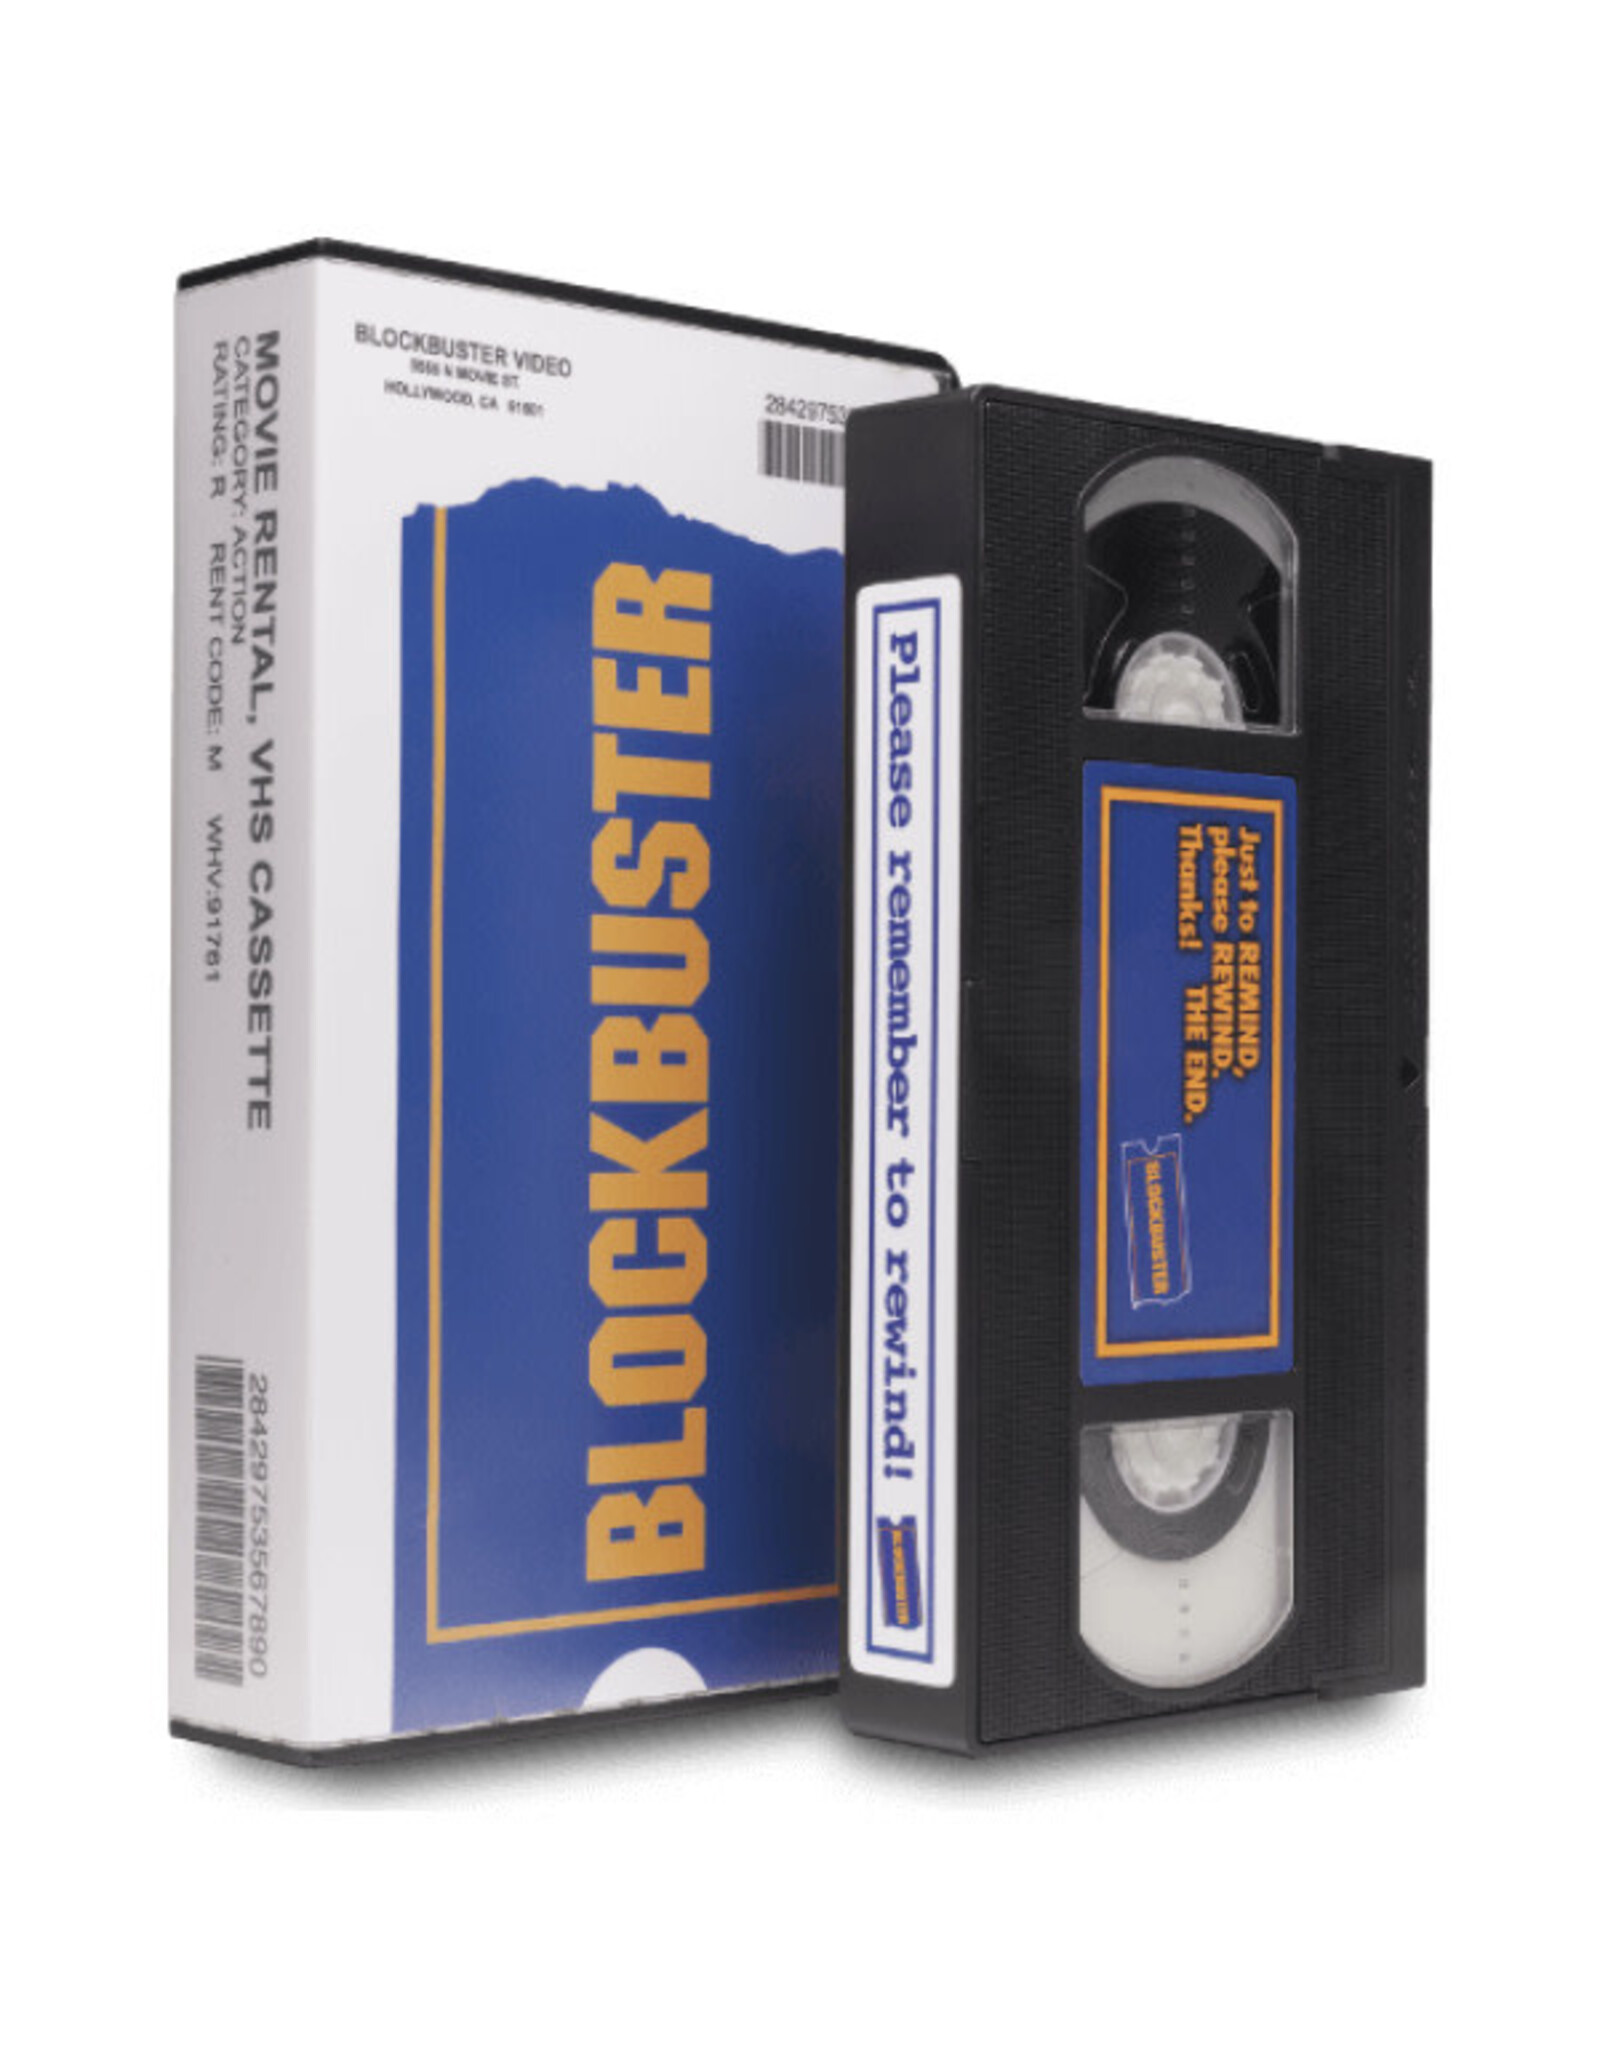 Blockbuster VHS - Nintendo Switch Game Case